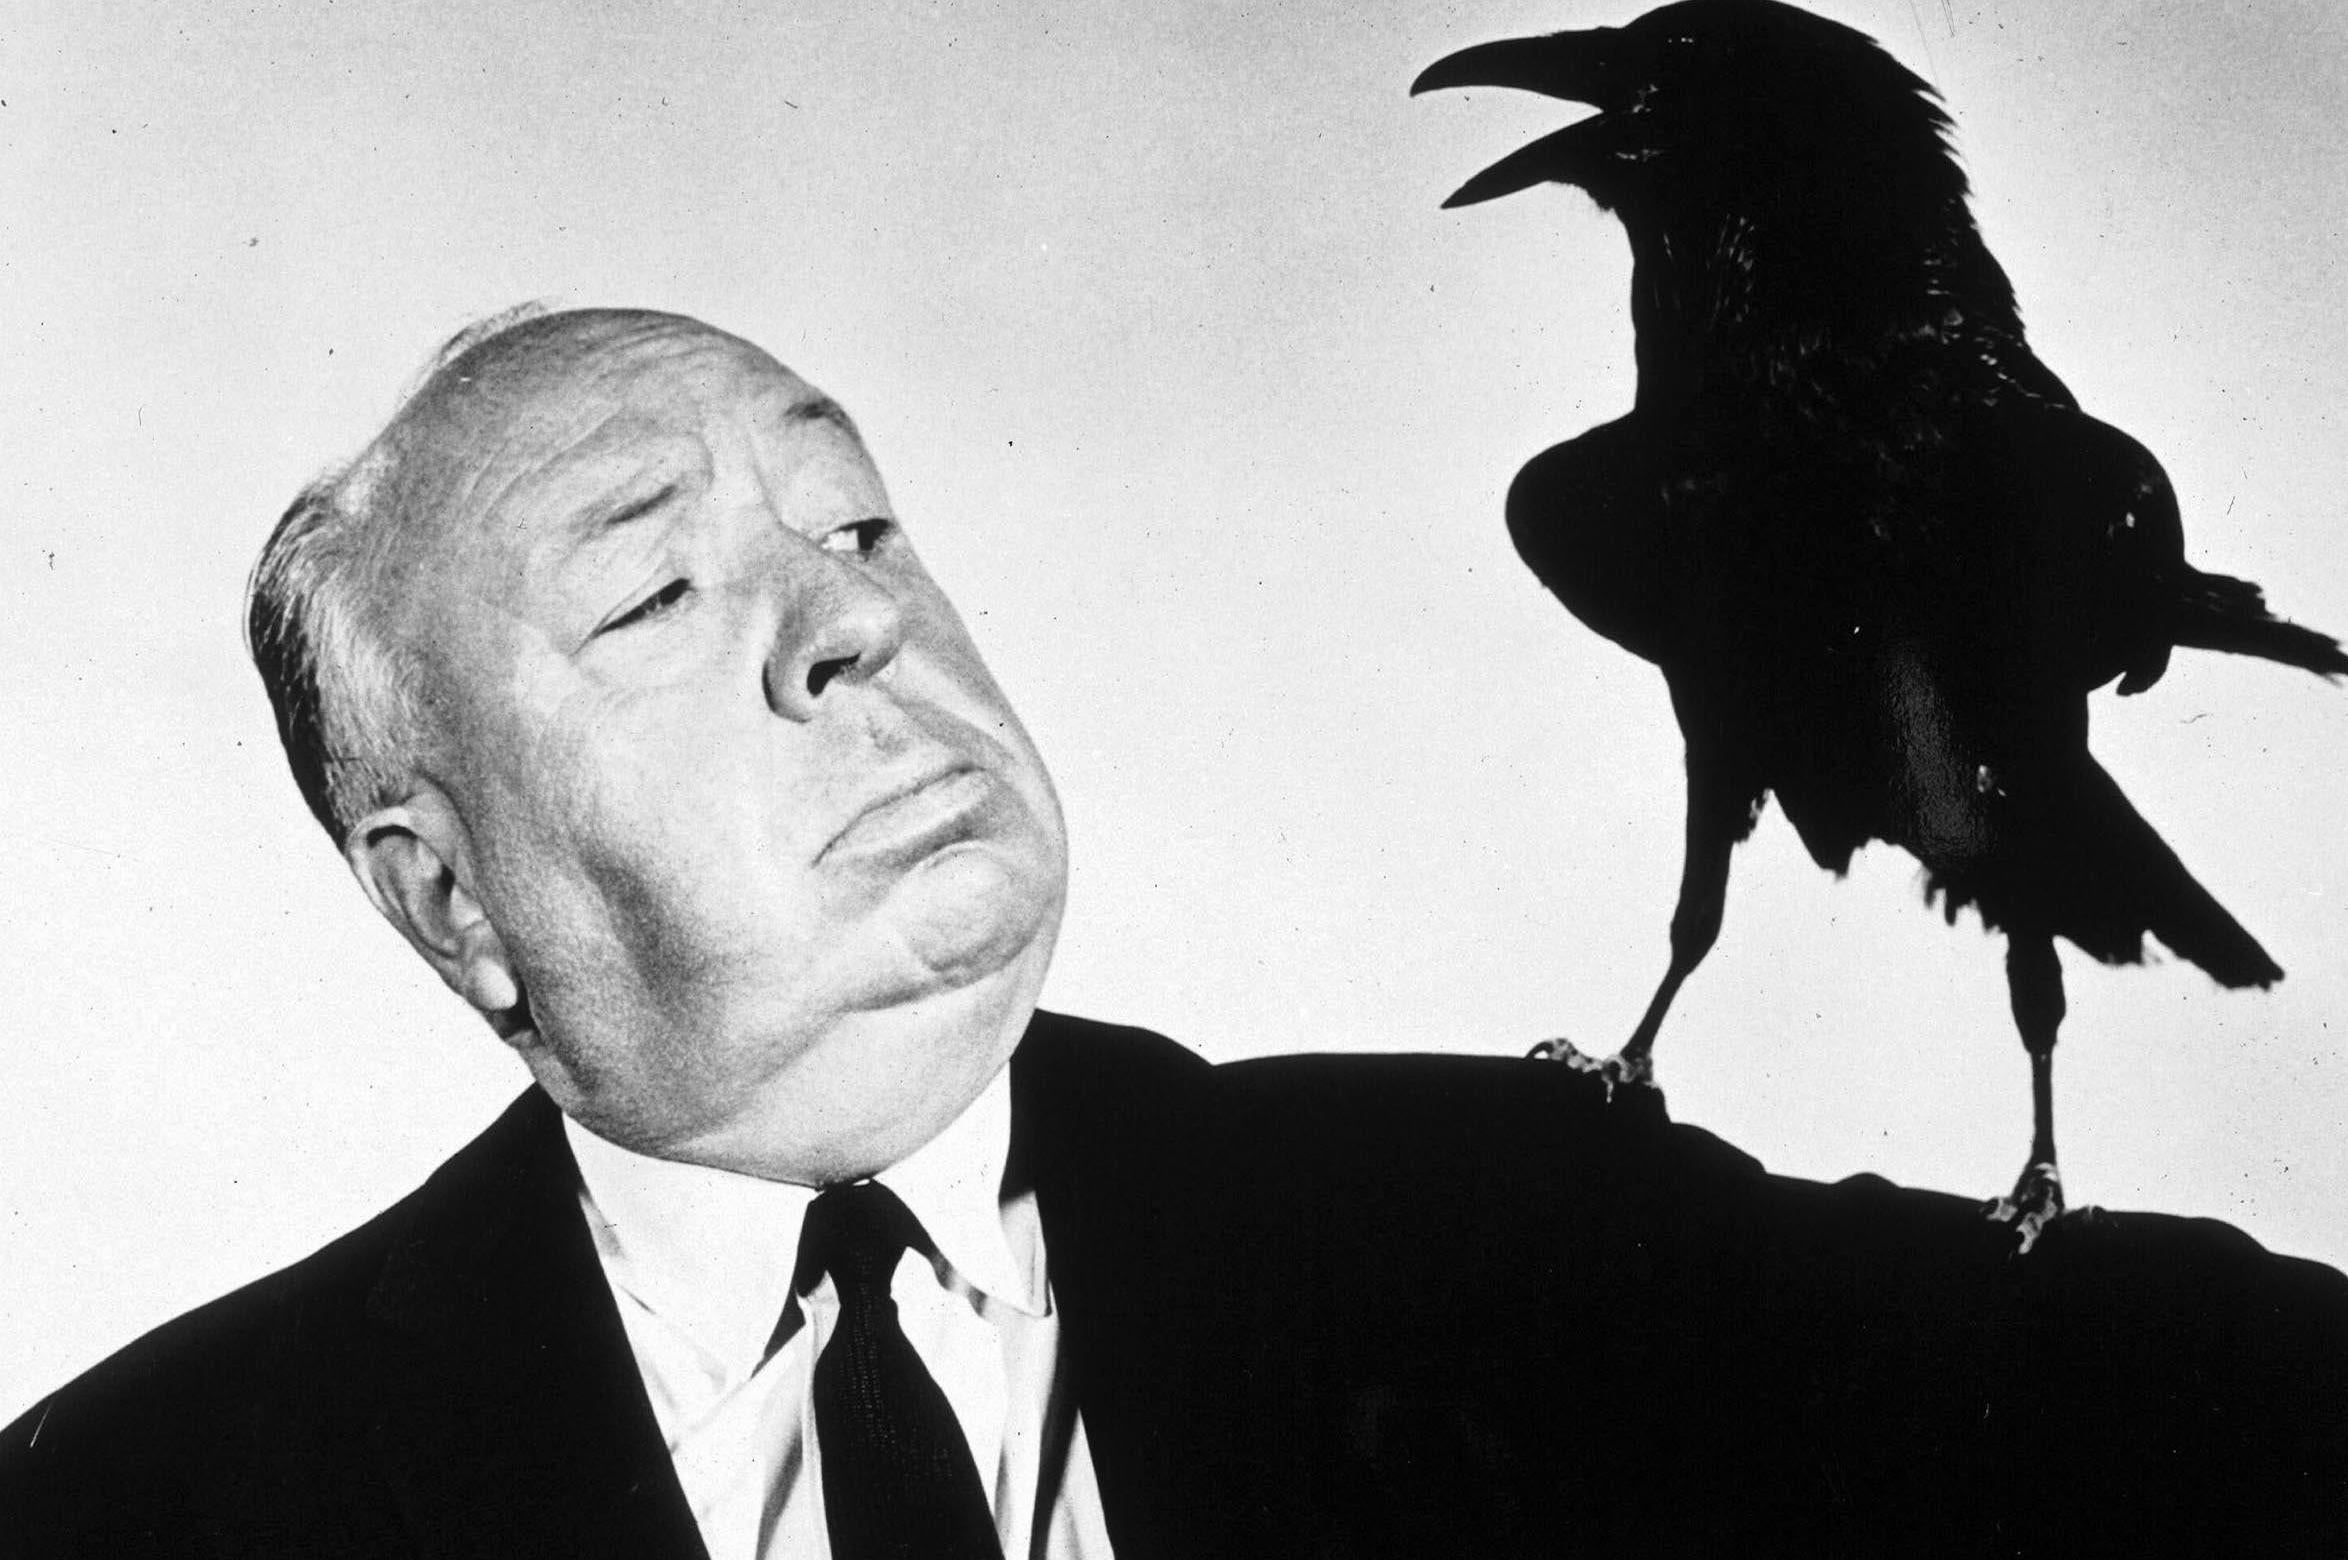 Hitchcock promoting his film 'The Birds',